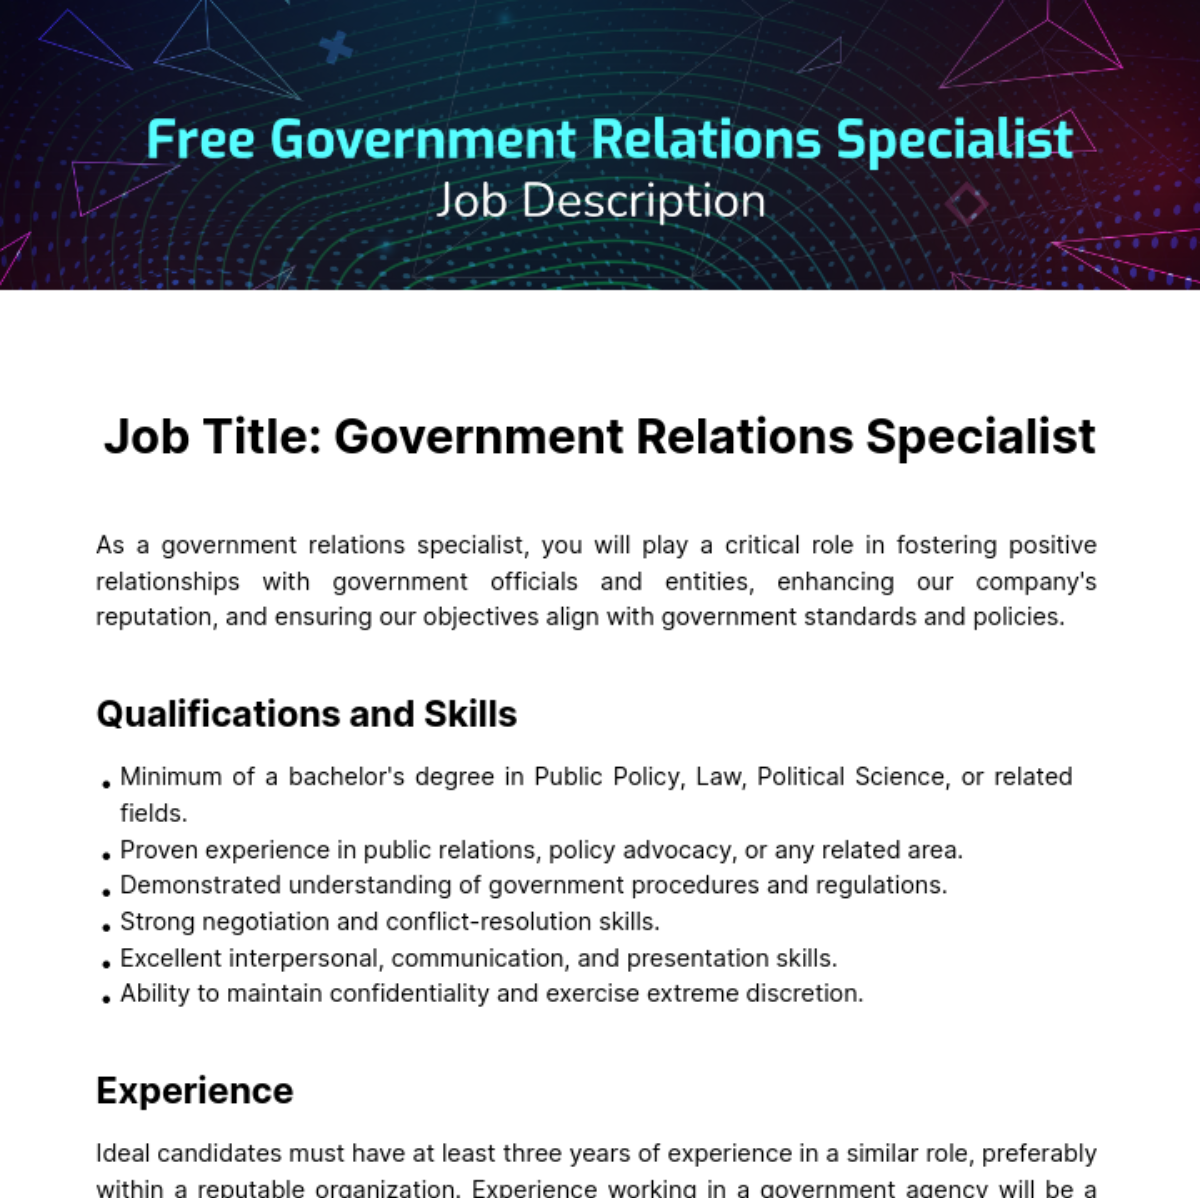 Free Government Relations Job Description Template